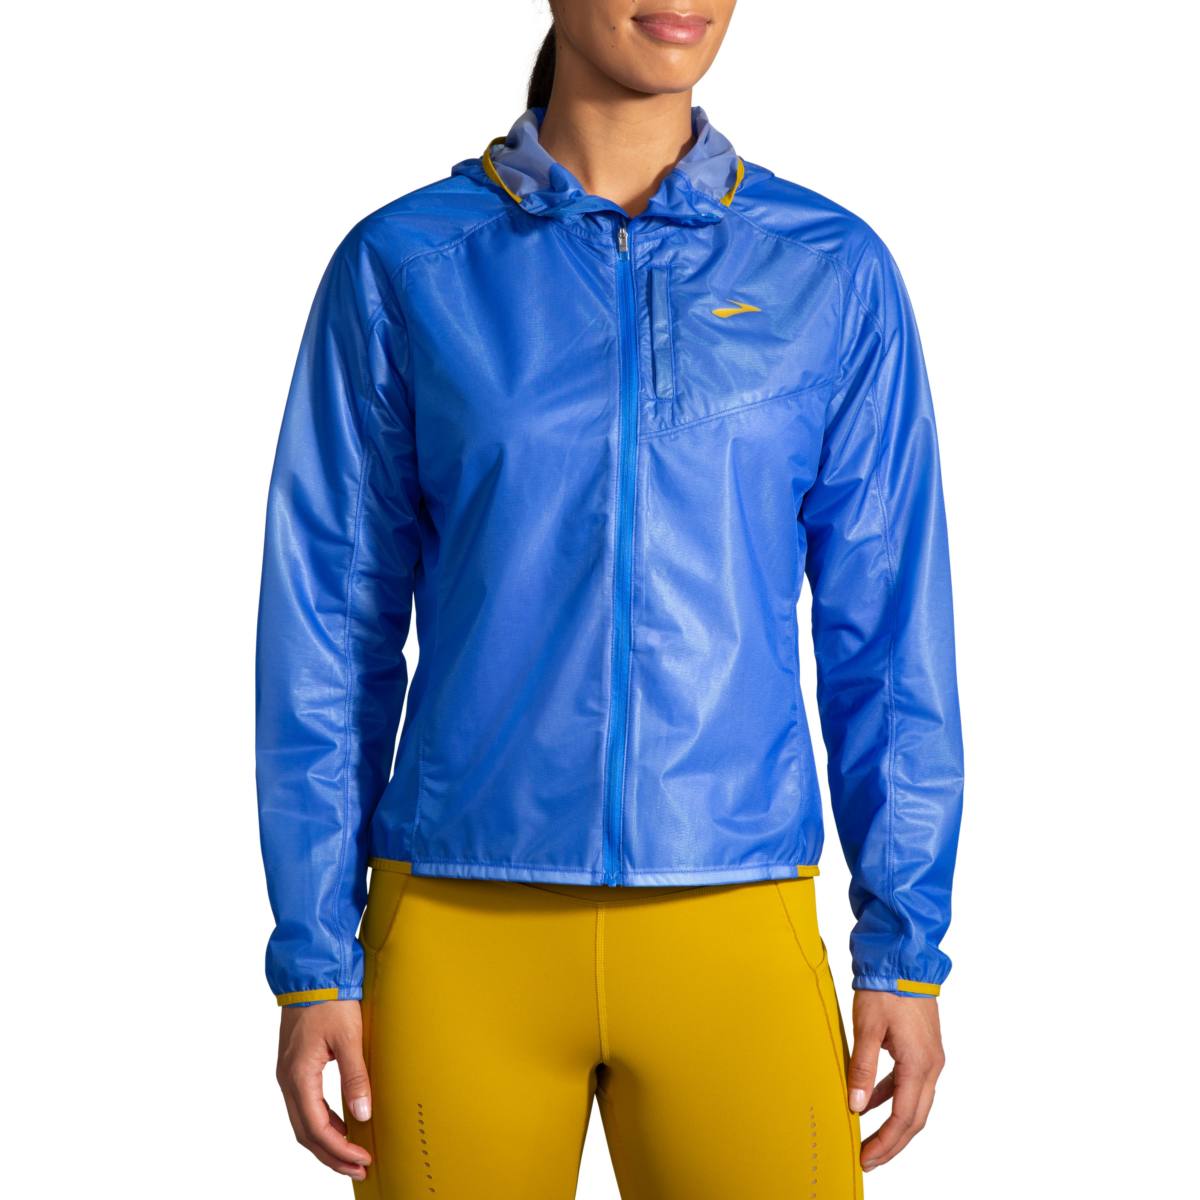 Women's Brooks All Altitude Weatherproof Jacket 221520-414